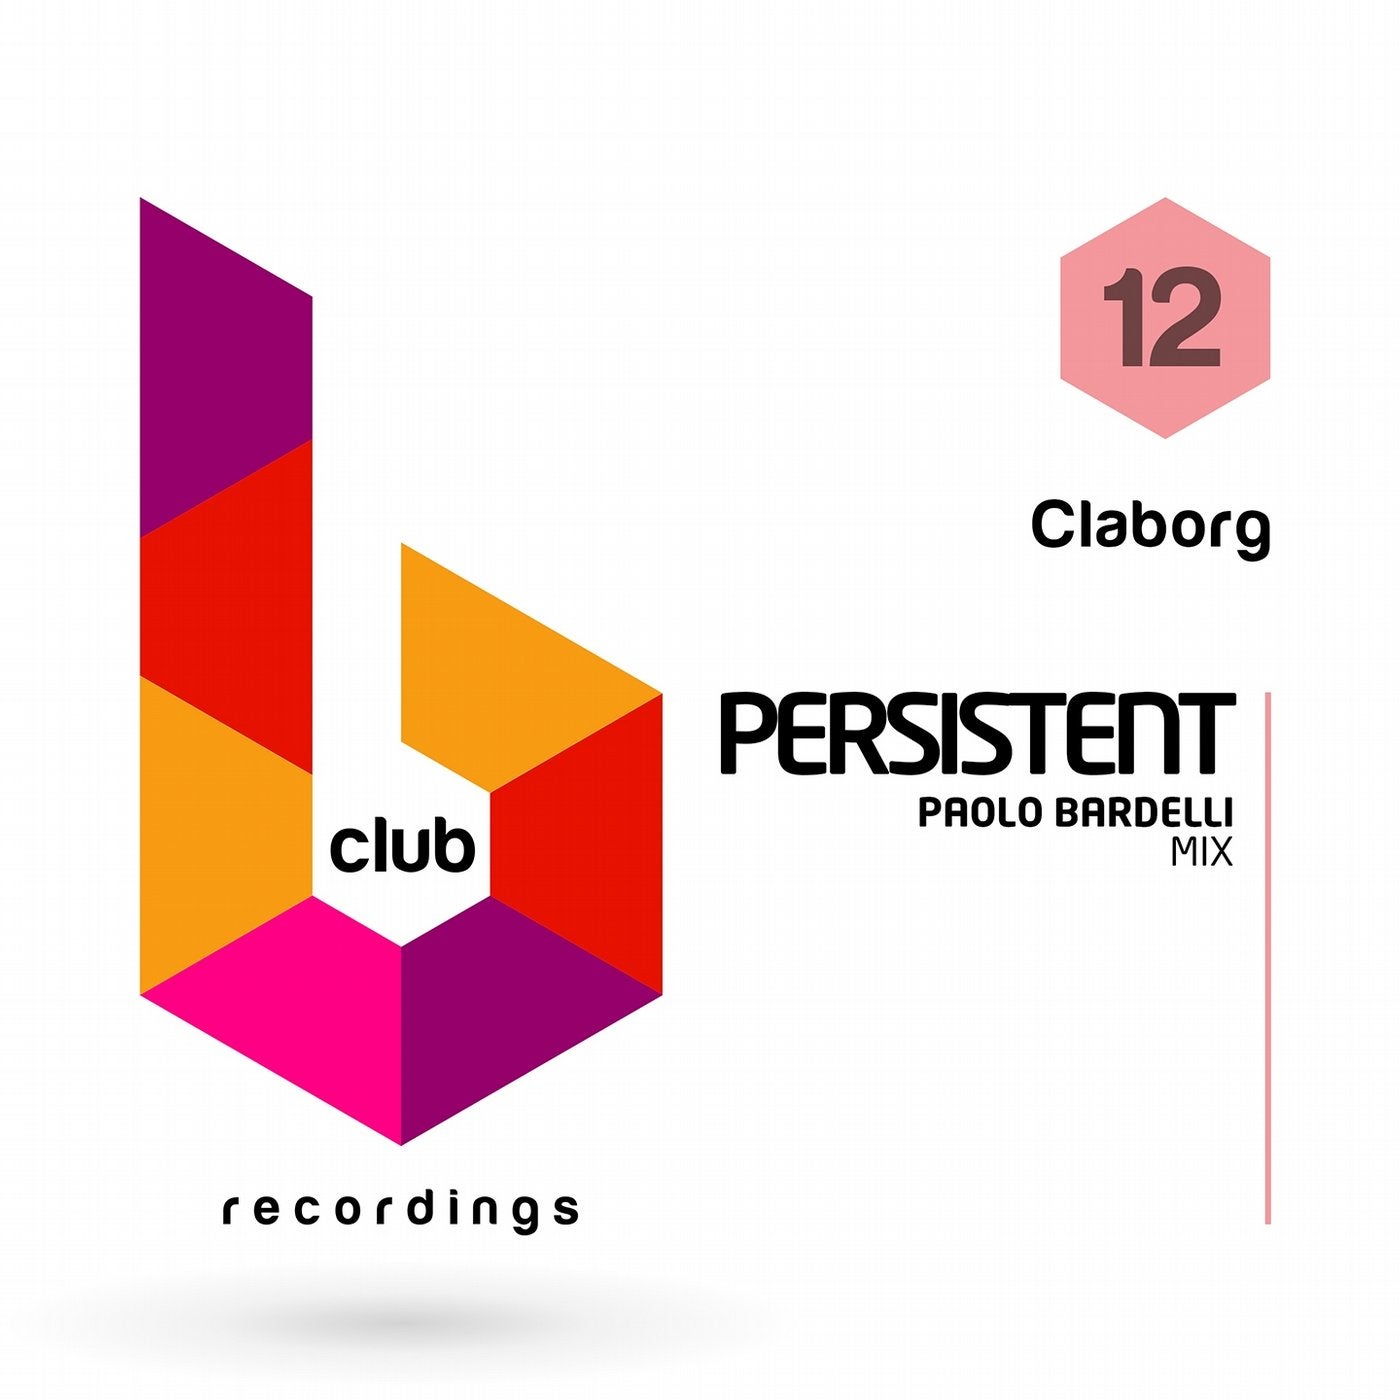 Persistent (Paolo Bardelli Mix)